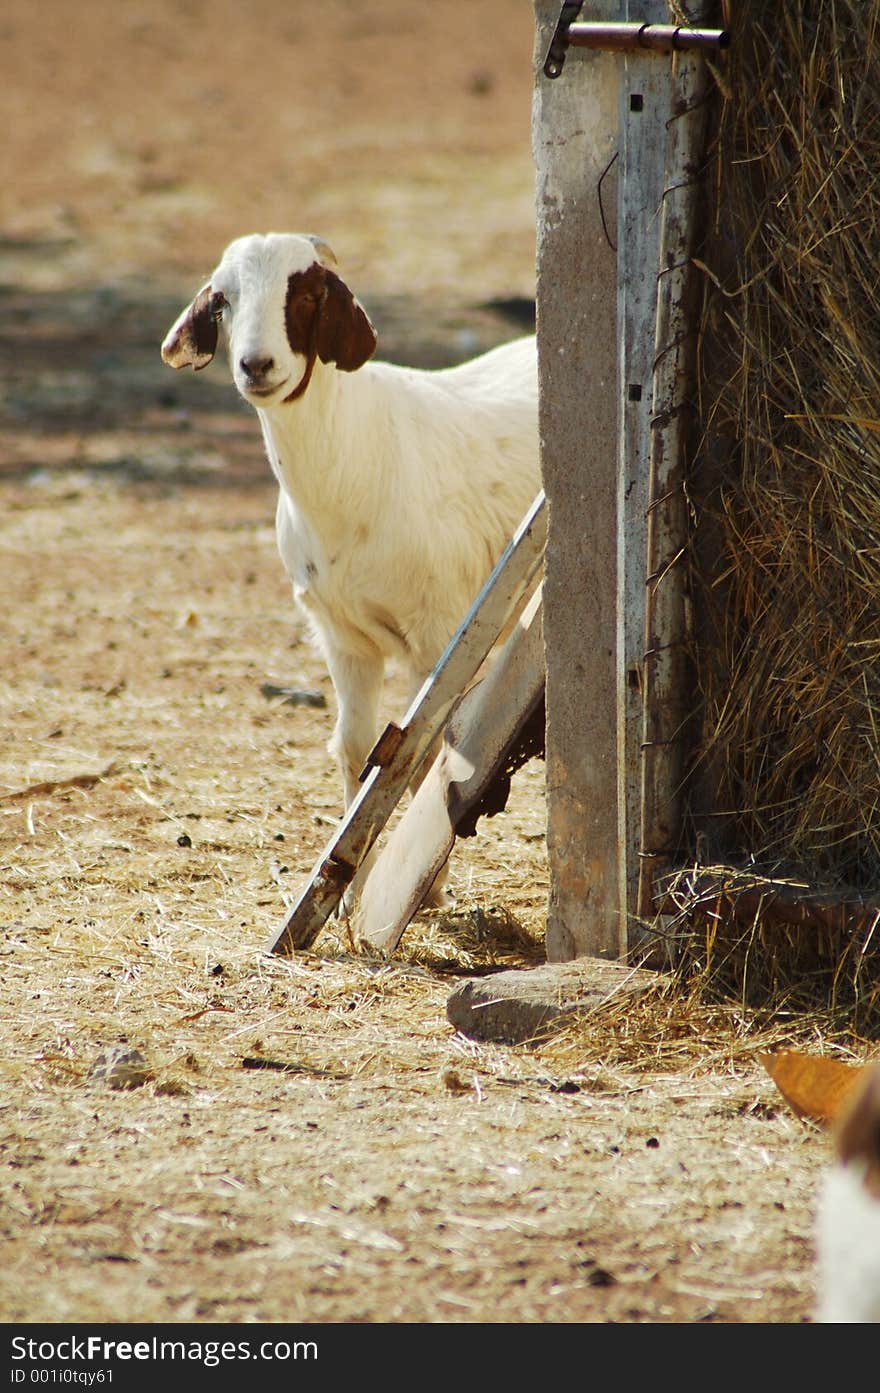 Goat peeking from behind the barn. Goat peeking from behind the barn